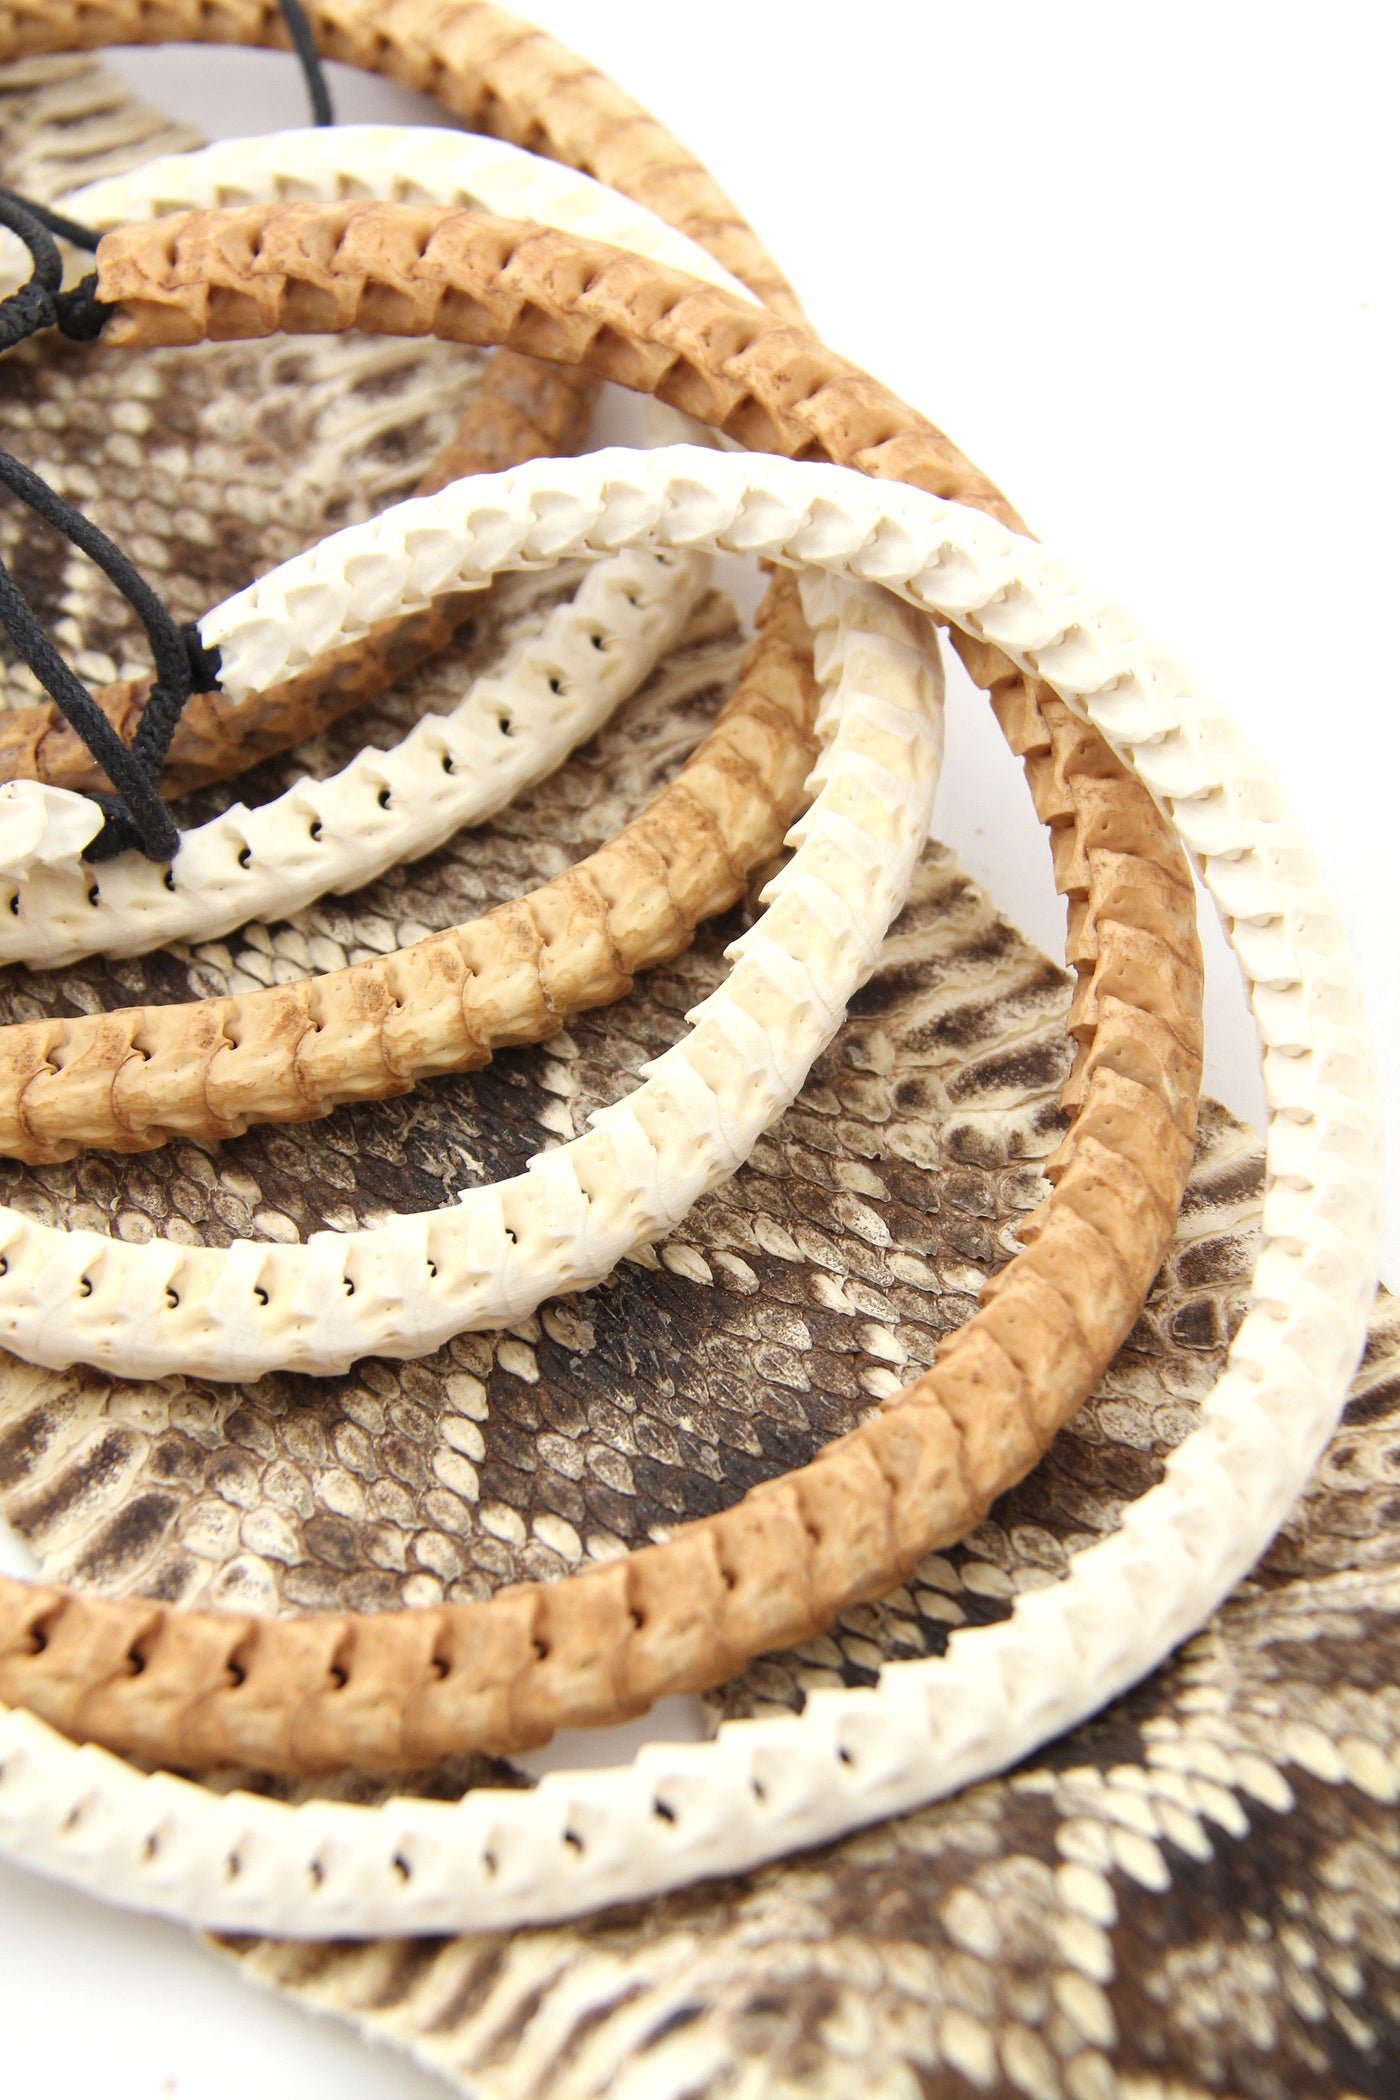 Serpentine: Brown & White Real Snake Vertebrae Beaded Necklace